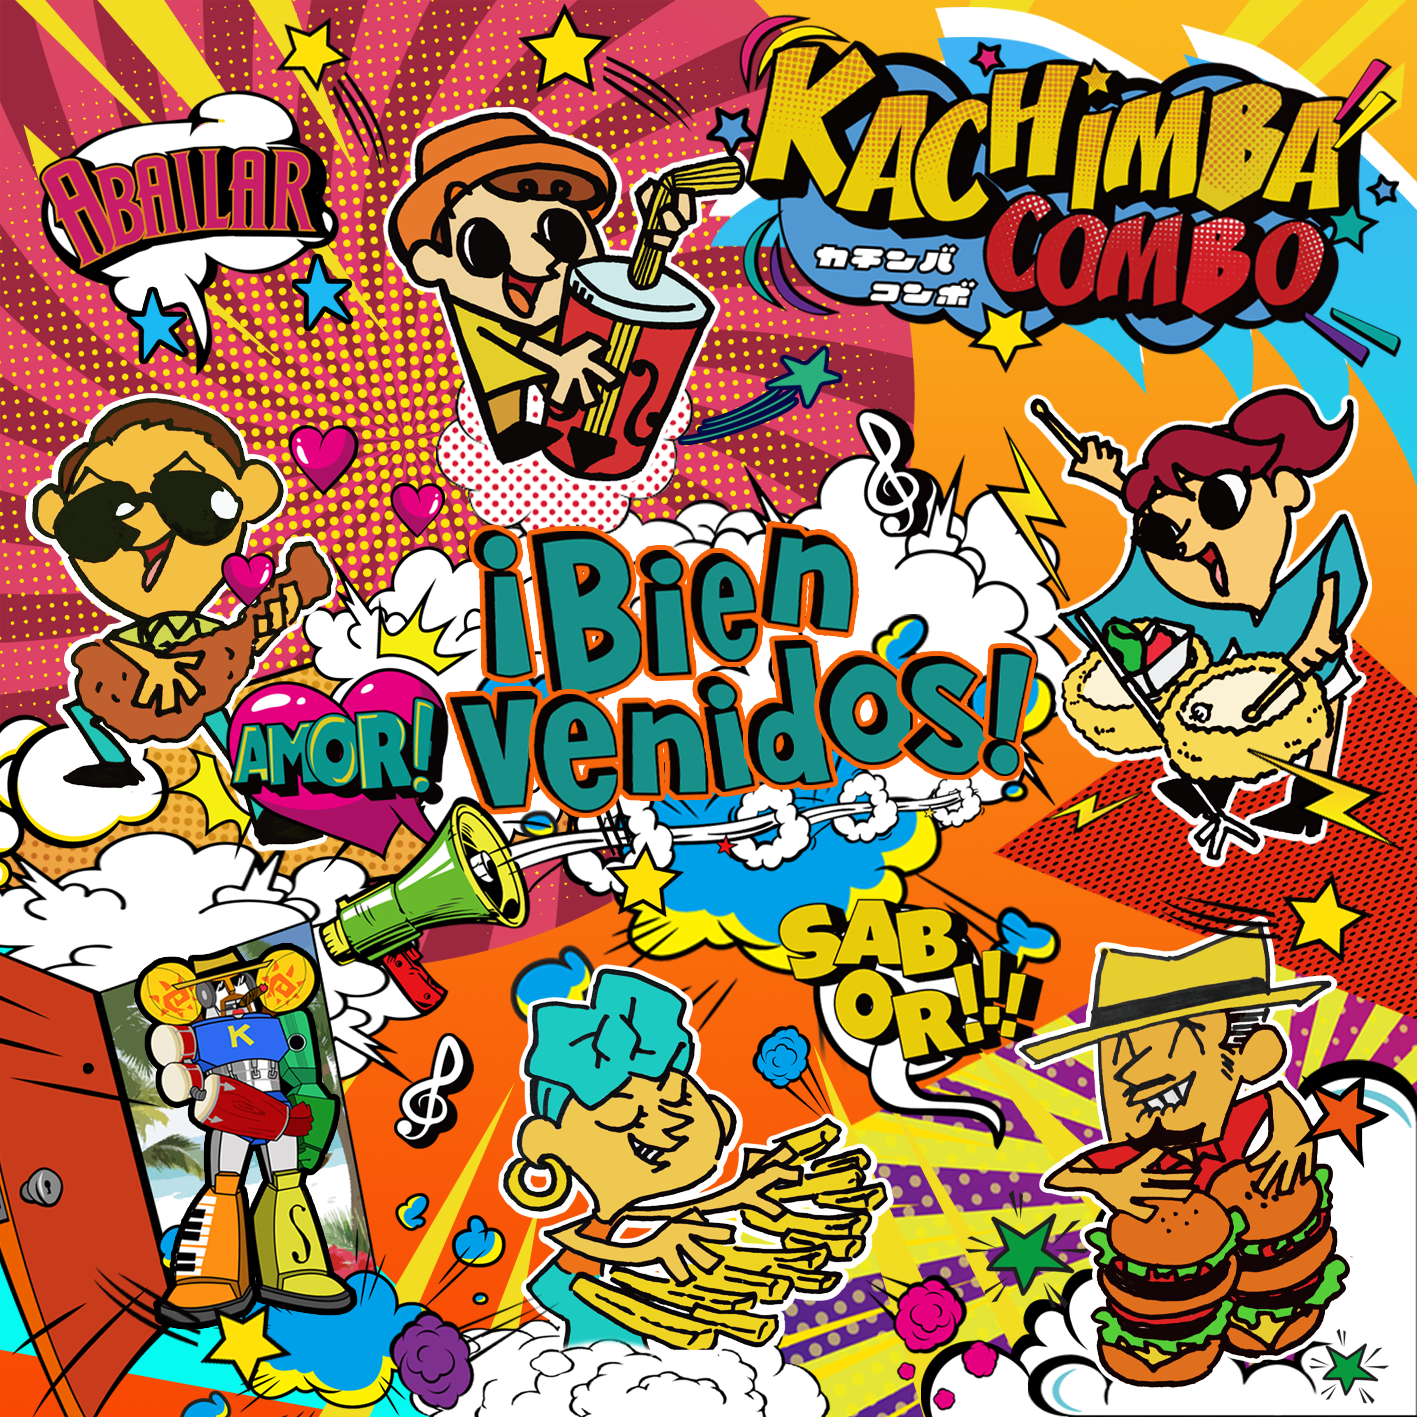 KACHIMBA COMBO   Album｢¡Bienvenidos!｣(Hacha-gamaku)